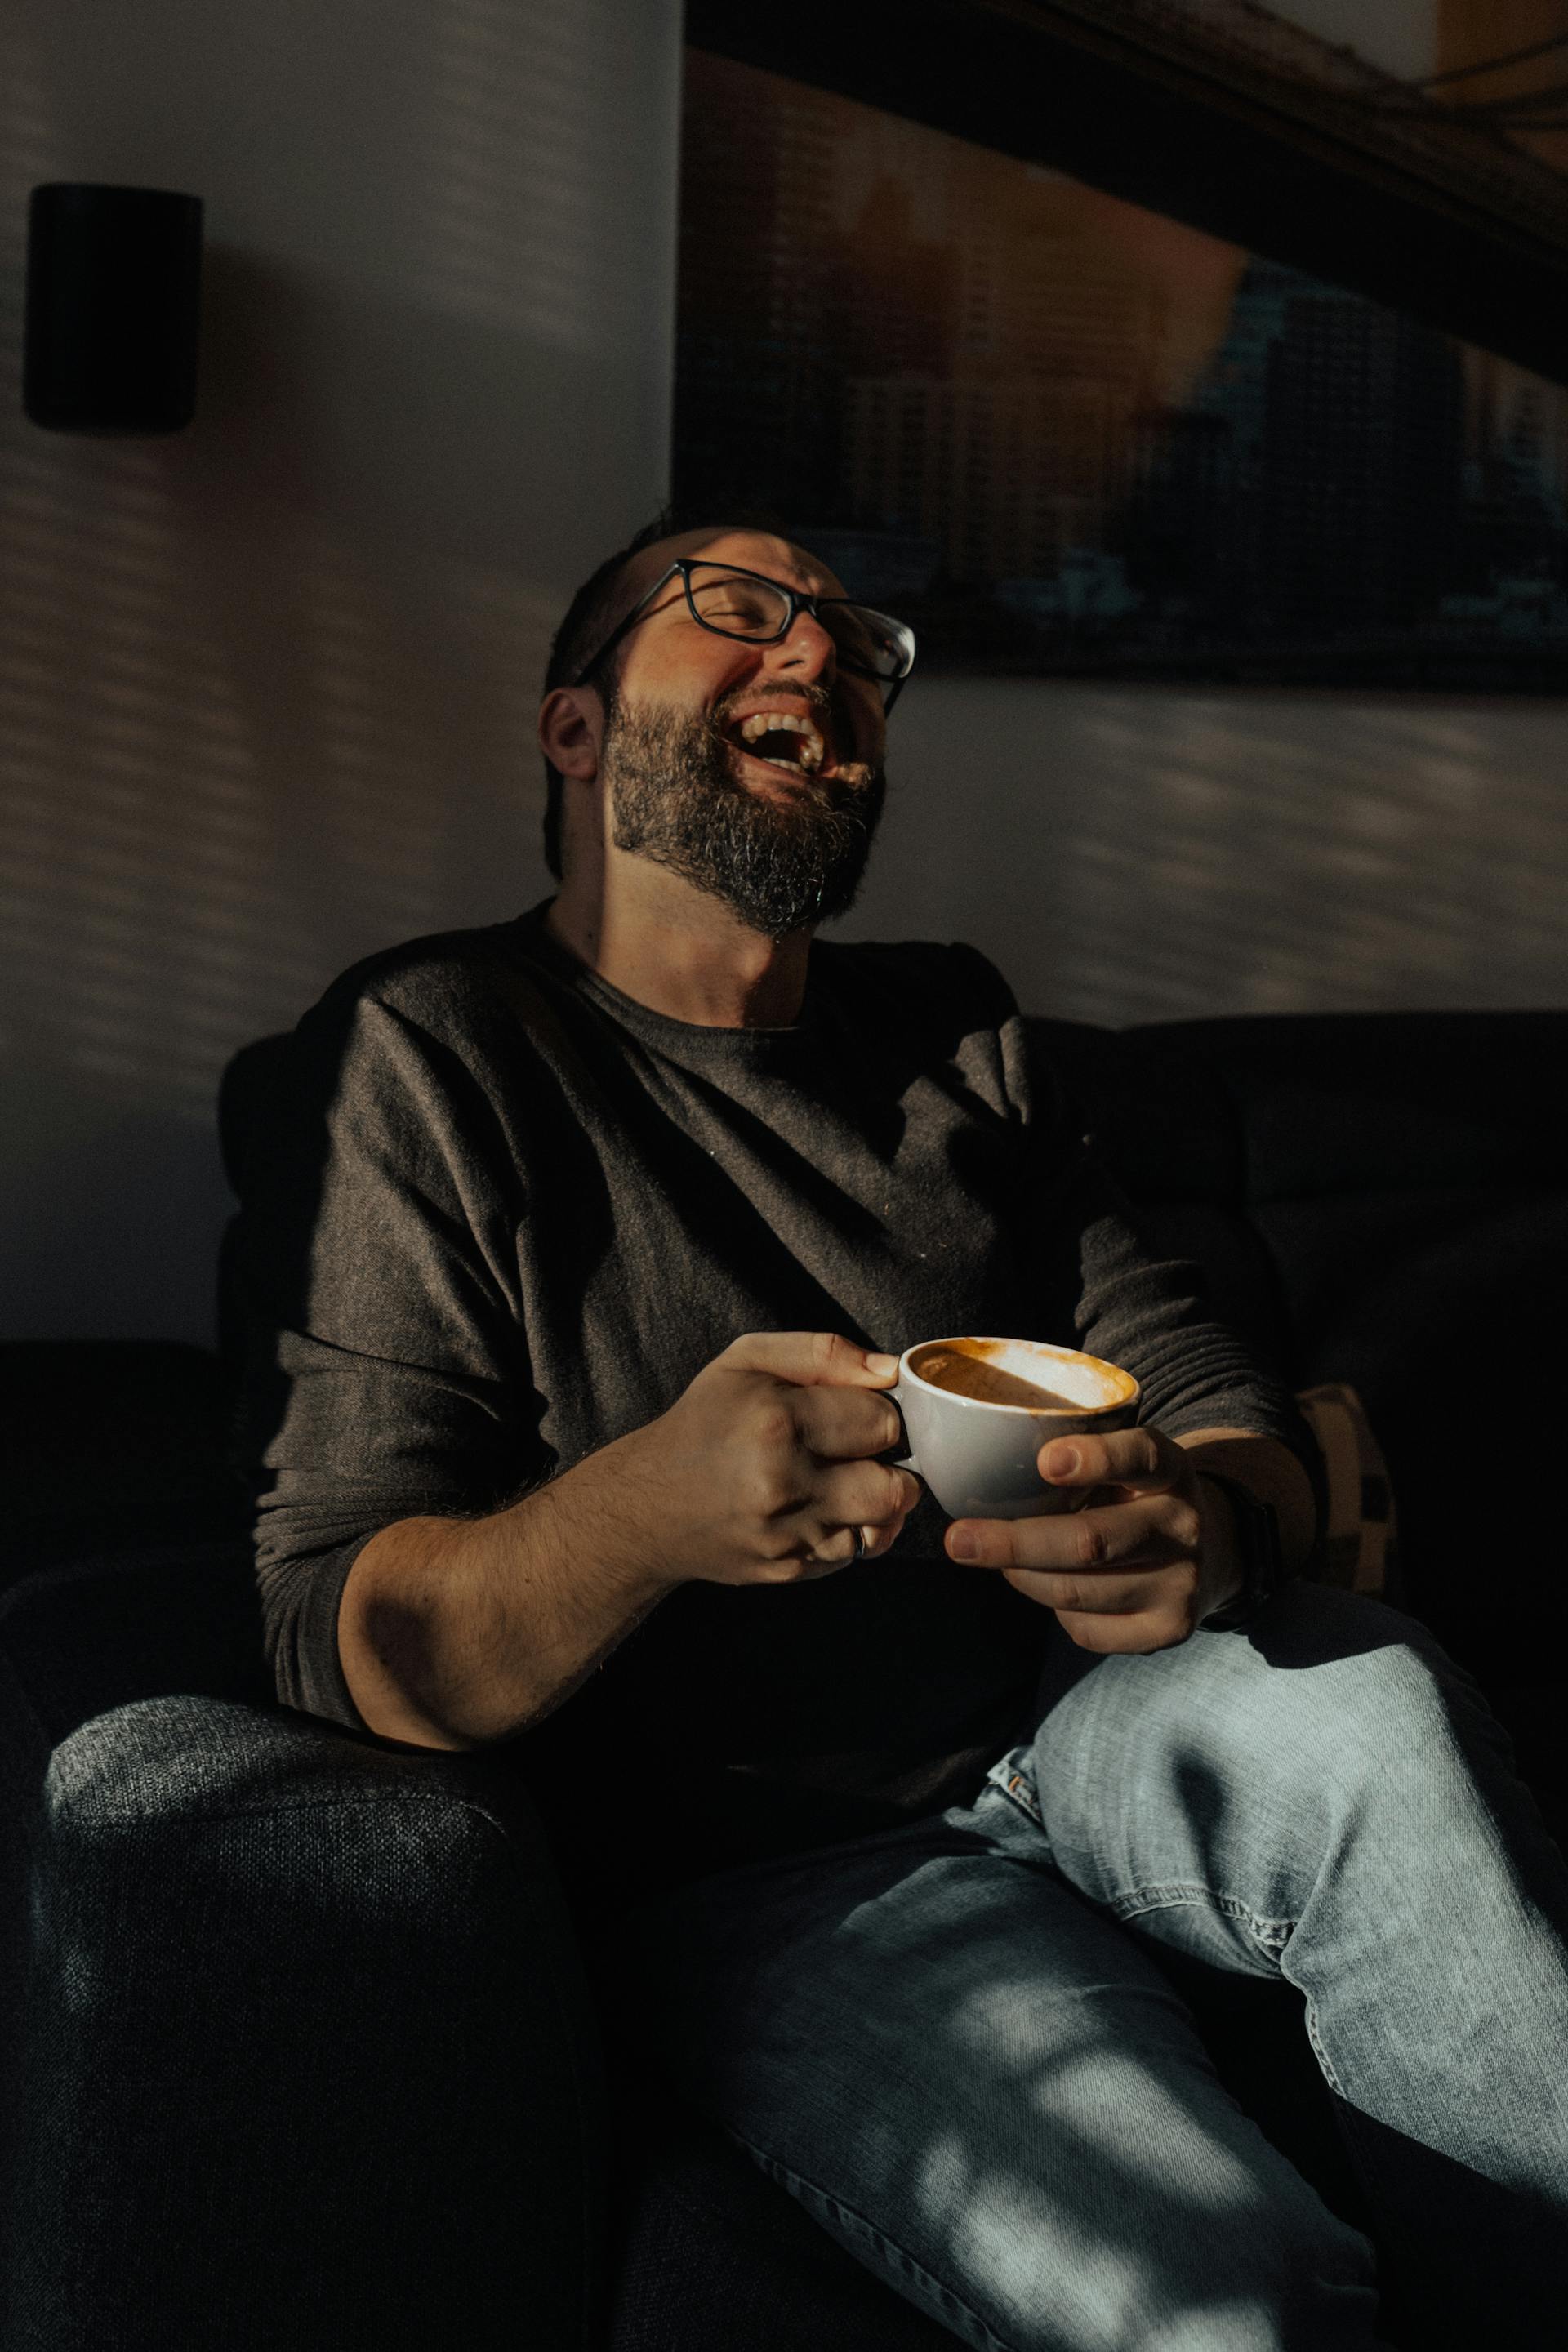 A man laughing | Source: Pexels